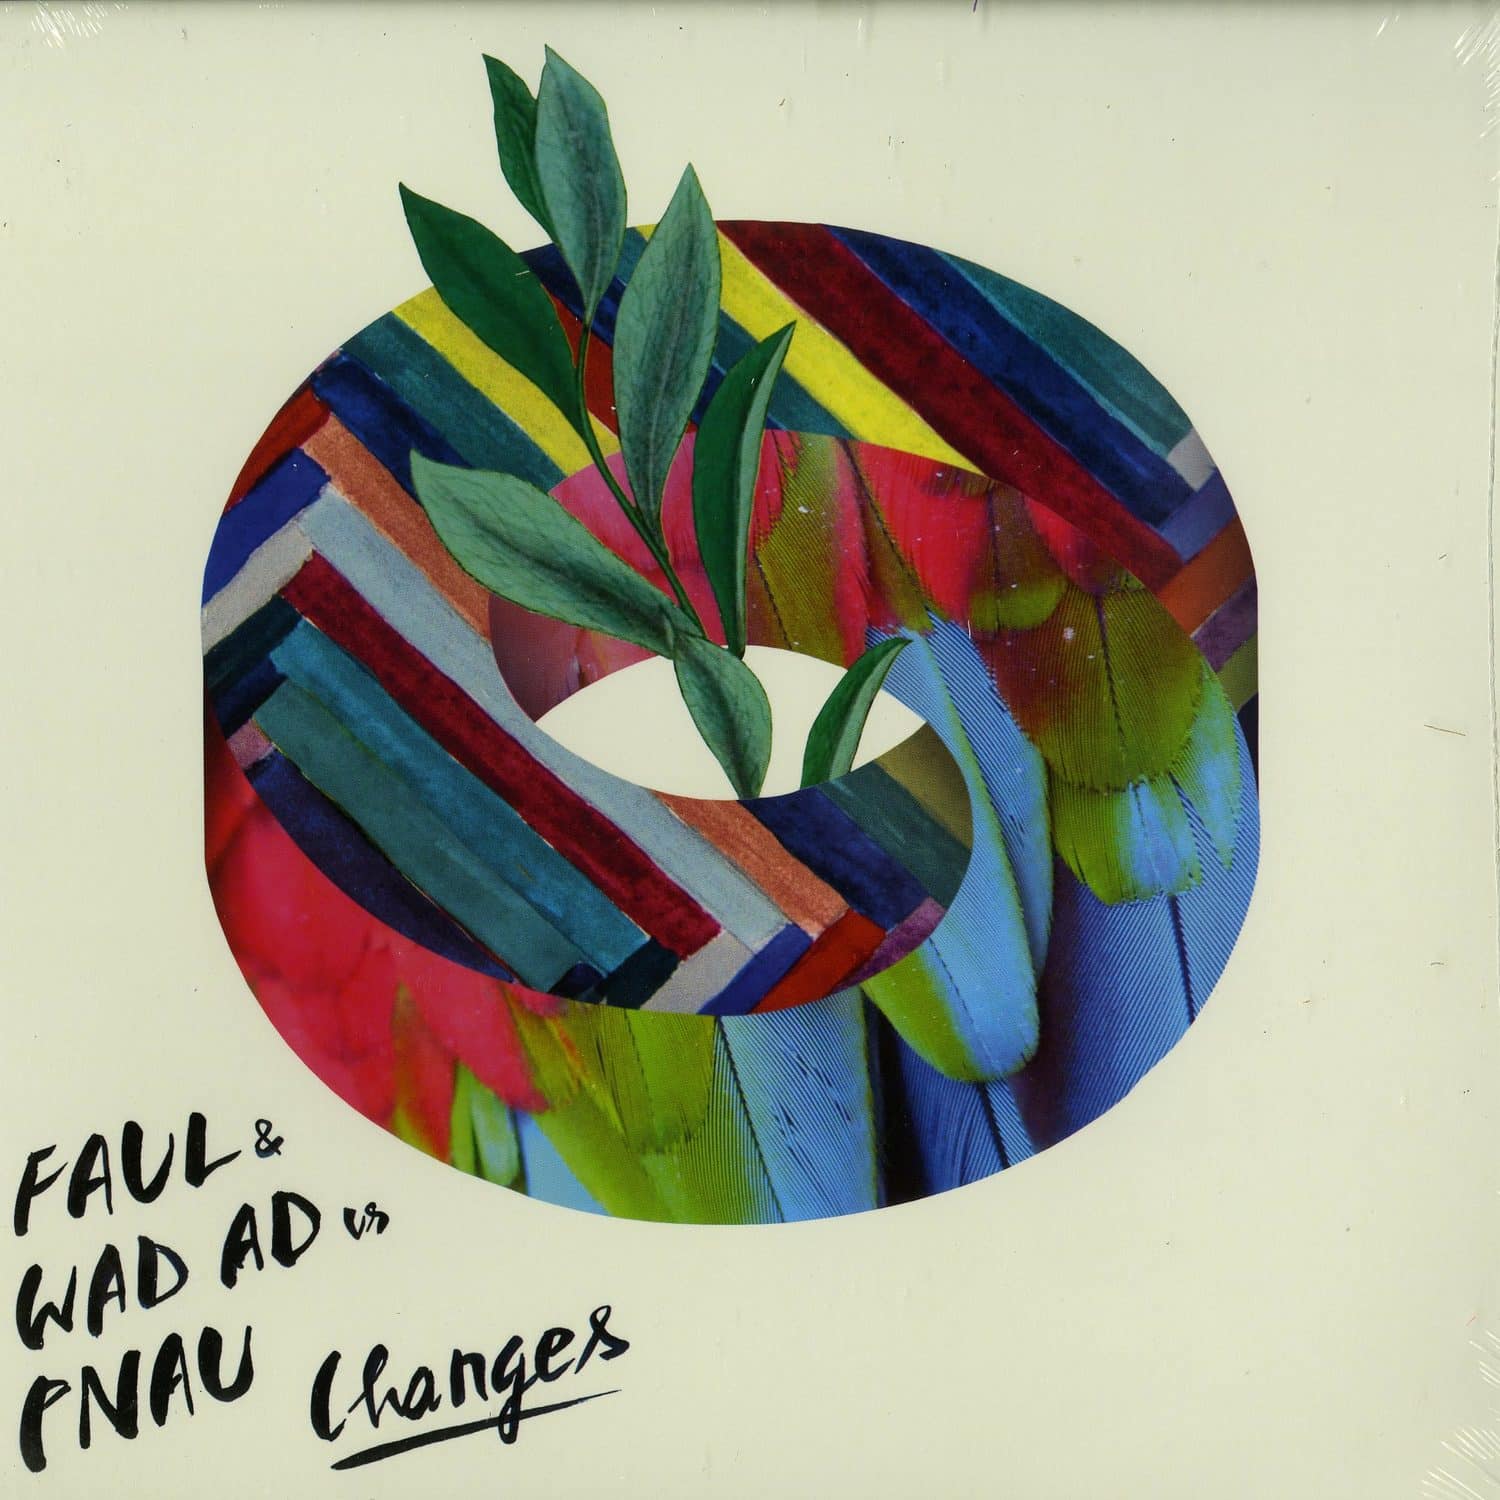 Faul & Wad Ad vs. Pnau - CHANGES